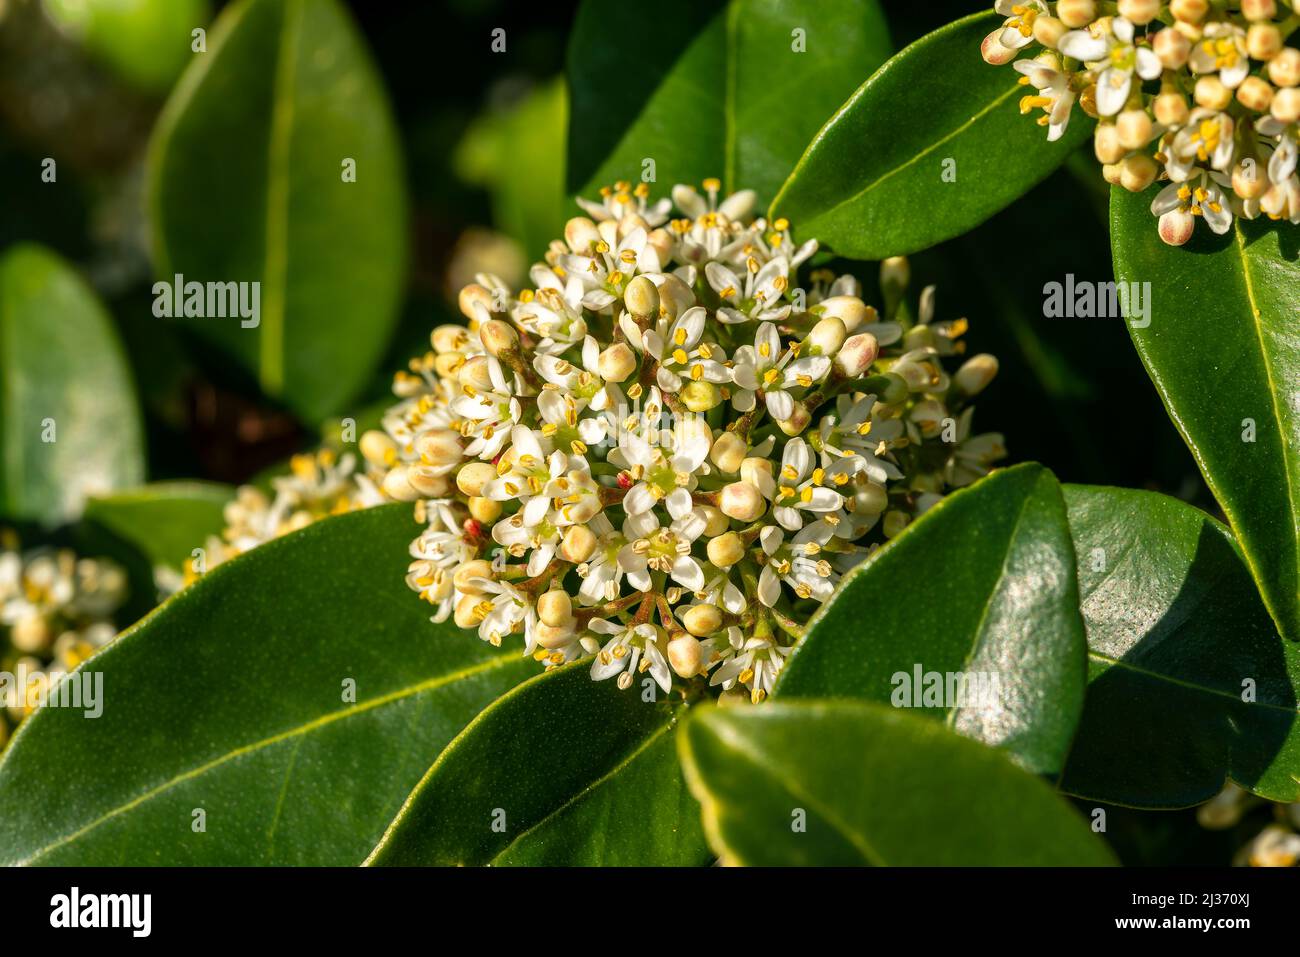 Skimmia japonica 'Fragrans' a spring flowering shrub plant with a white springtime flower, stock photo image Stock Photo